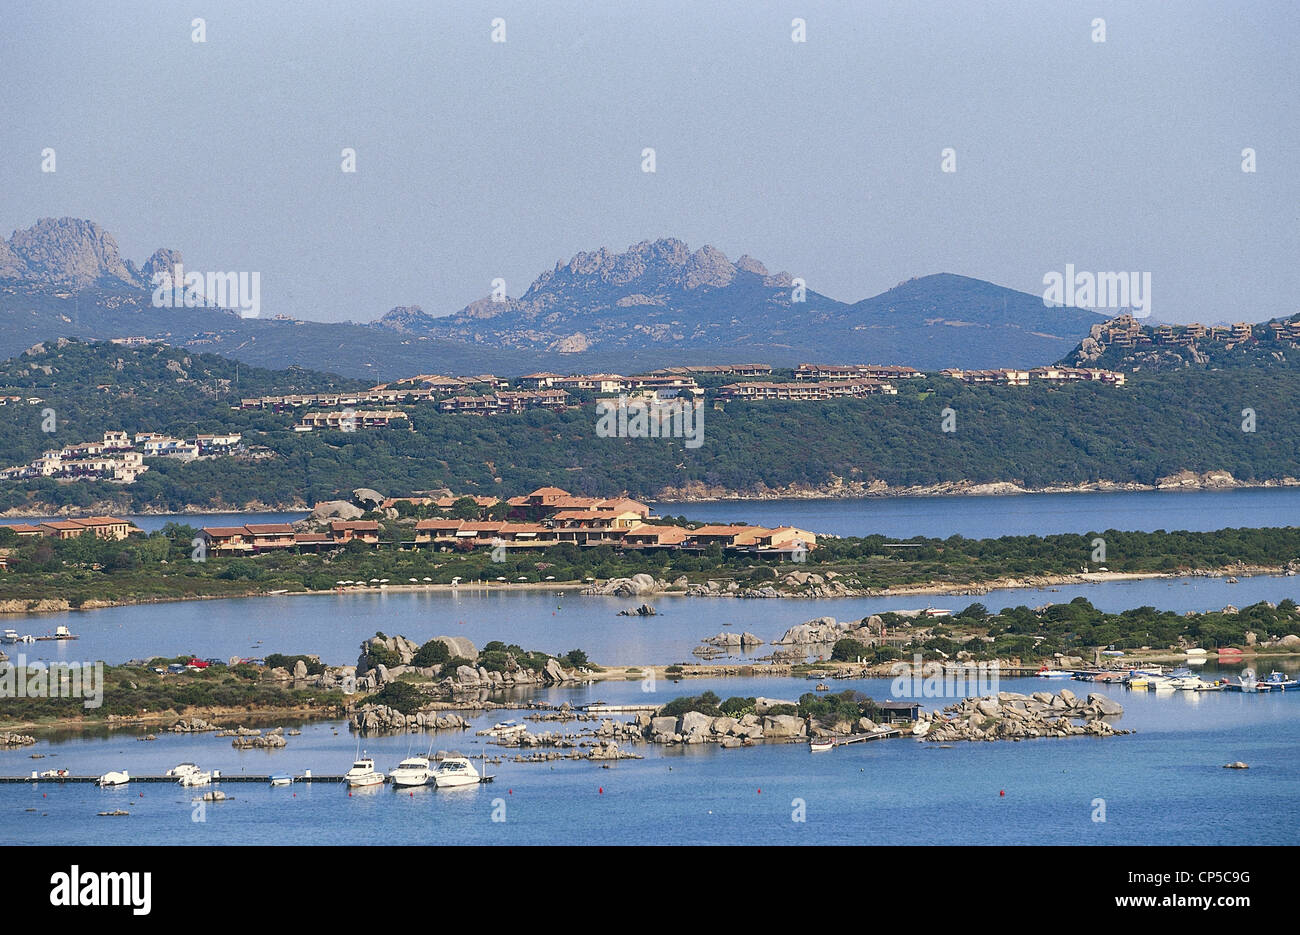 Sardegna - Costa Smeralda - Golfo di Cugnana (Ot Foto stock - Alamy